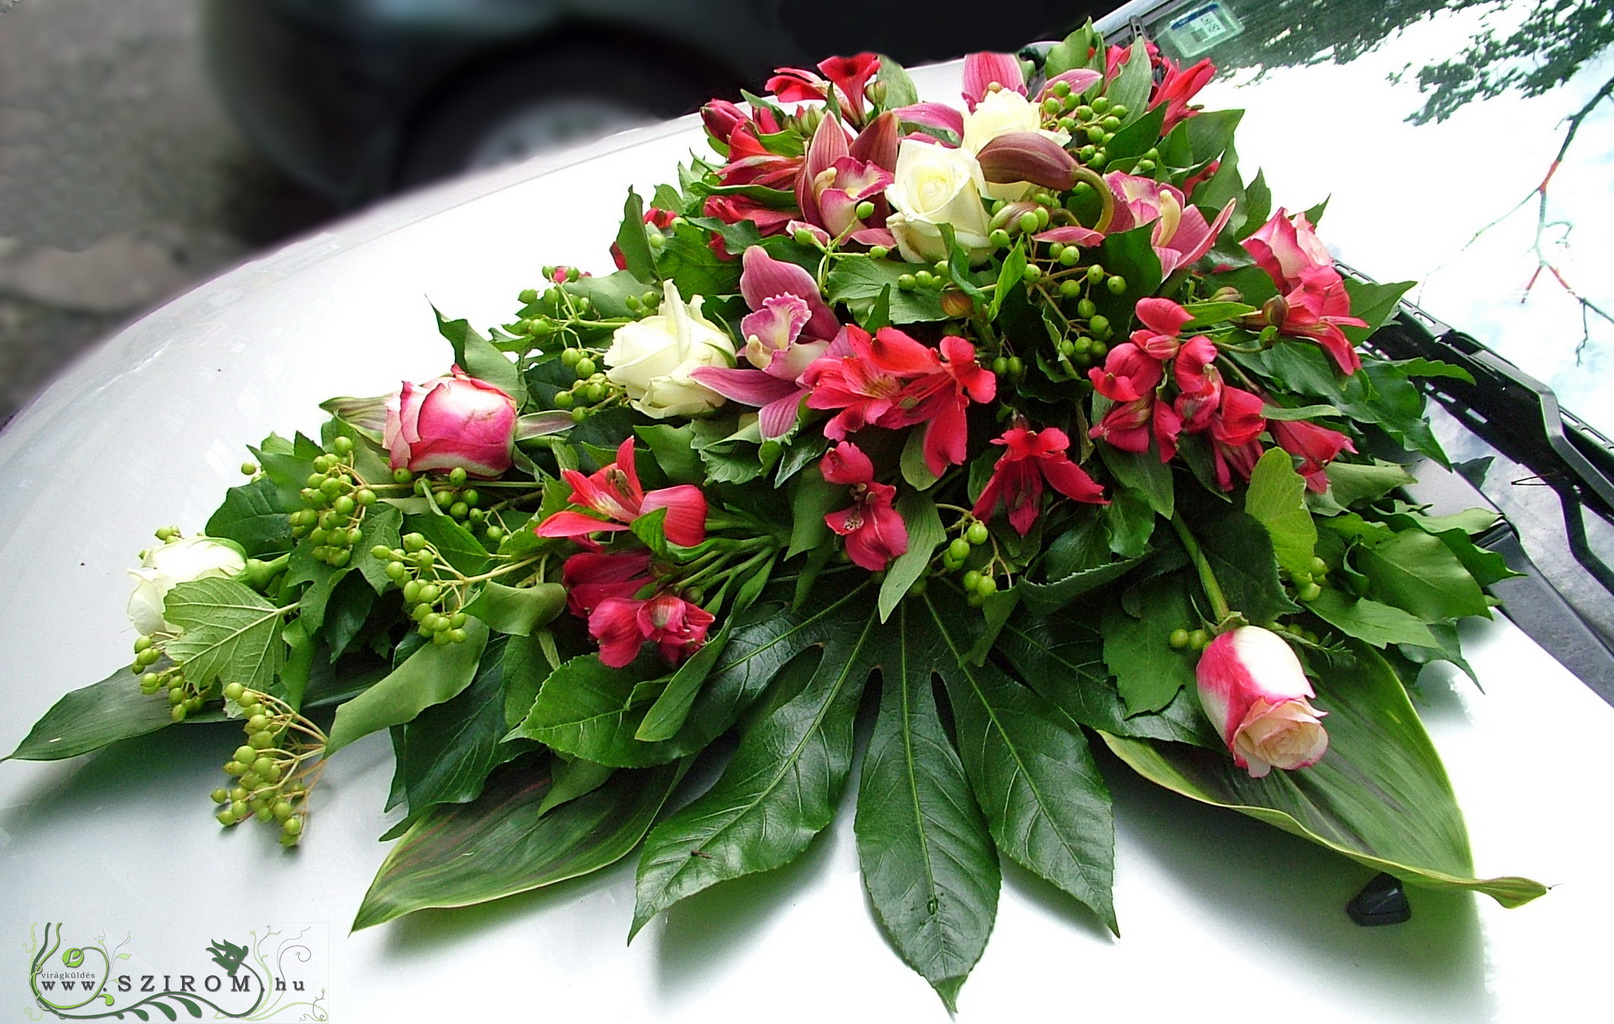 flower delivery Budapest - teardrop car flower arrangement with alstromeries, roses, Cymbidium orchids, pink)